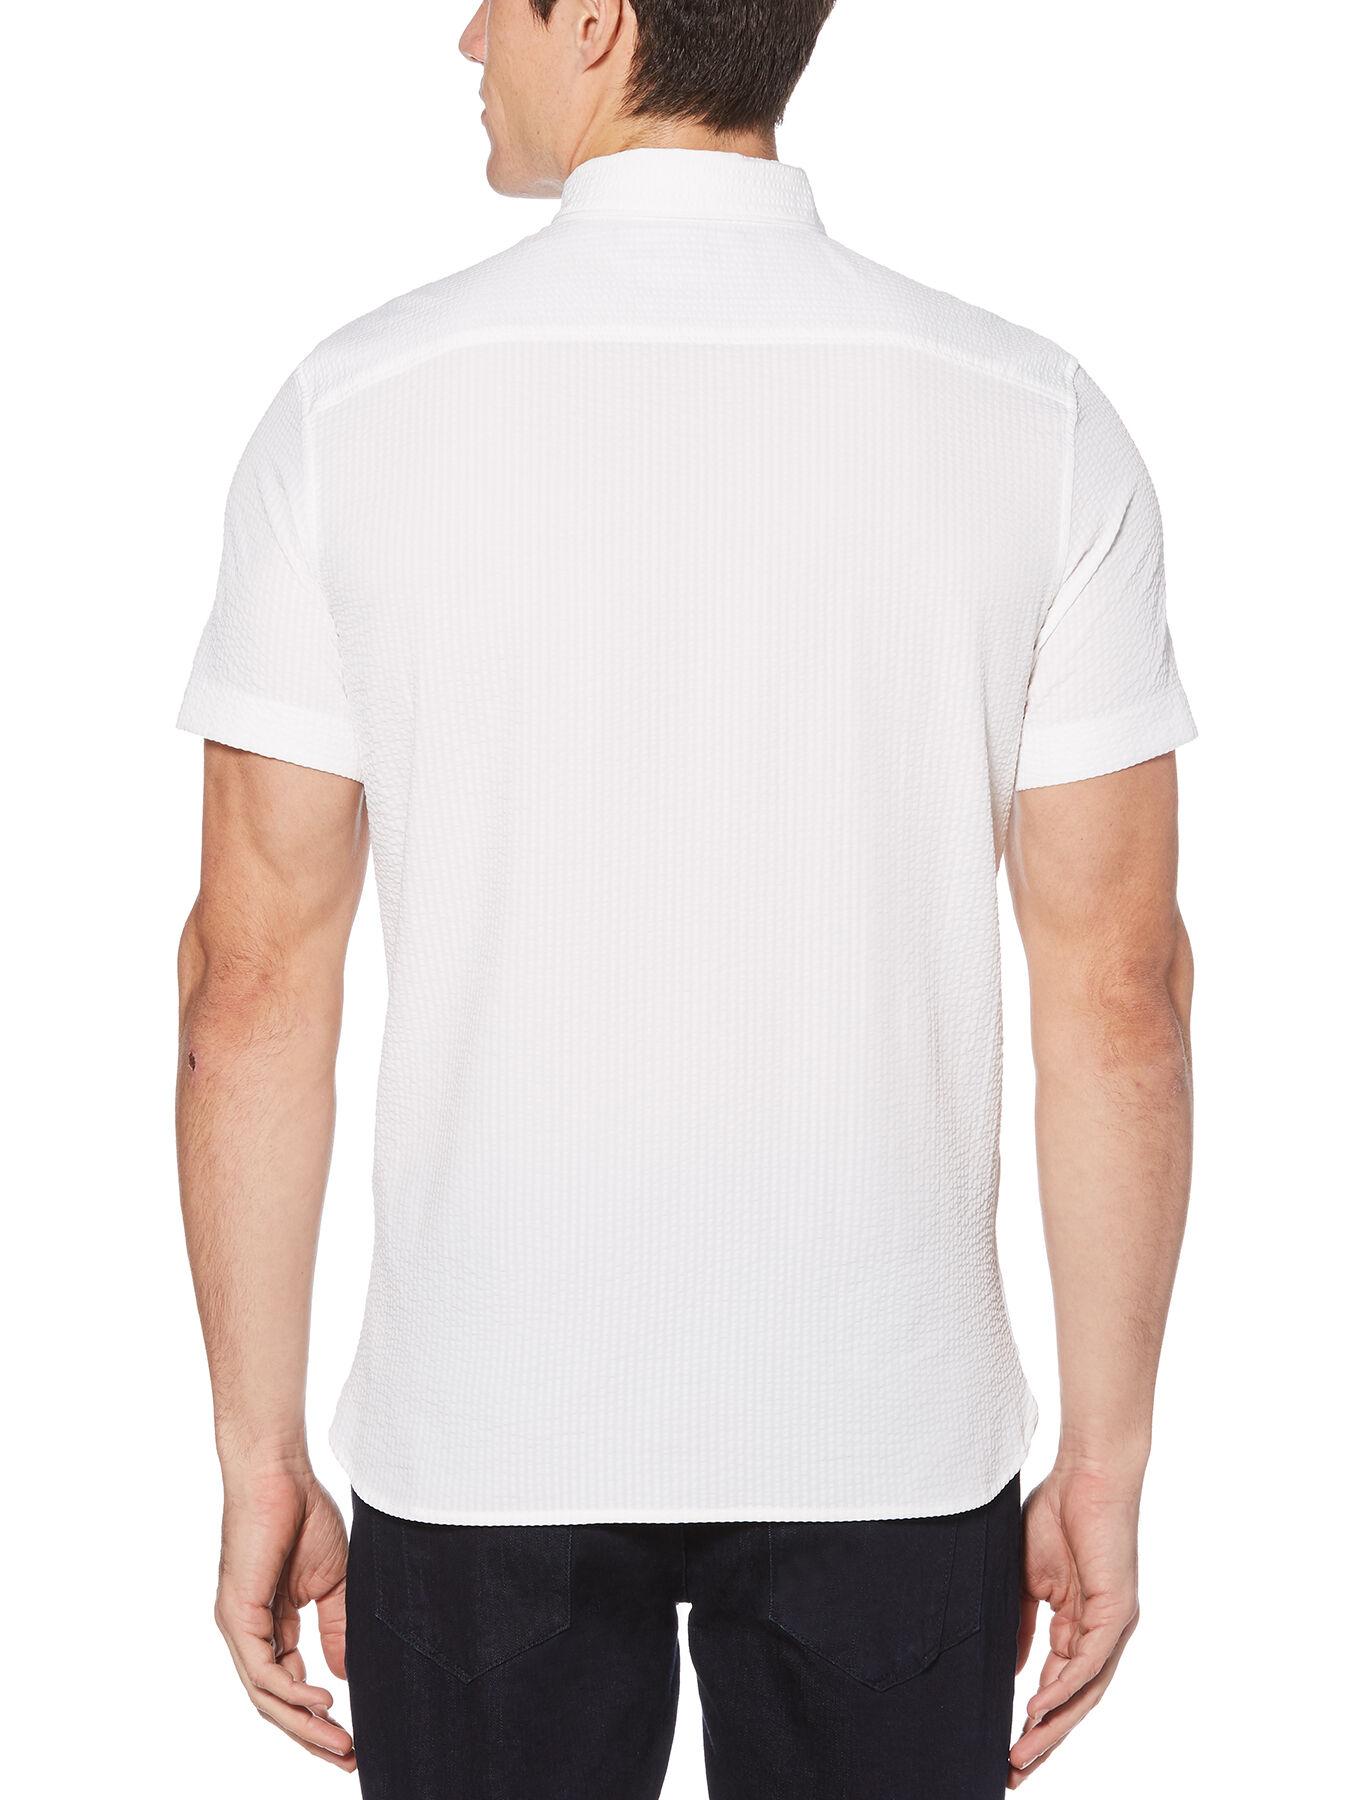 Perry Ellis Seersucker Stretch Shirt in White for Men - Lyst